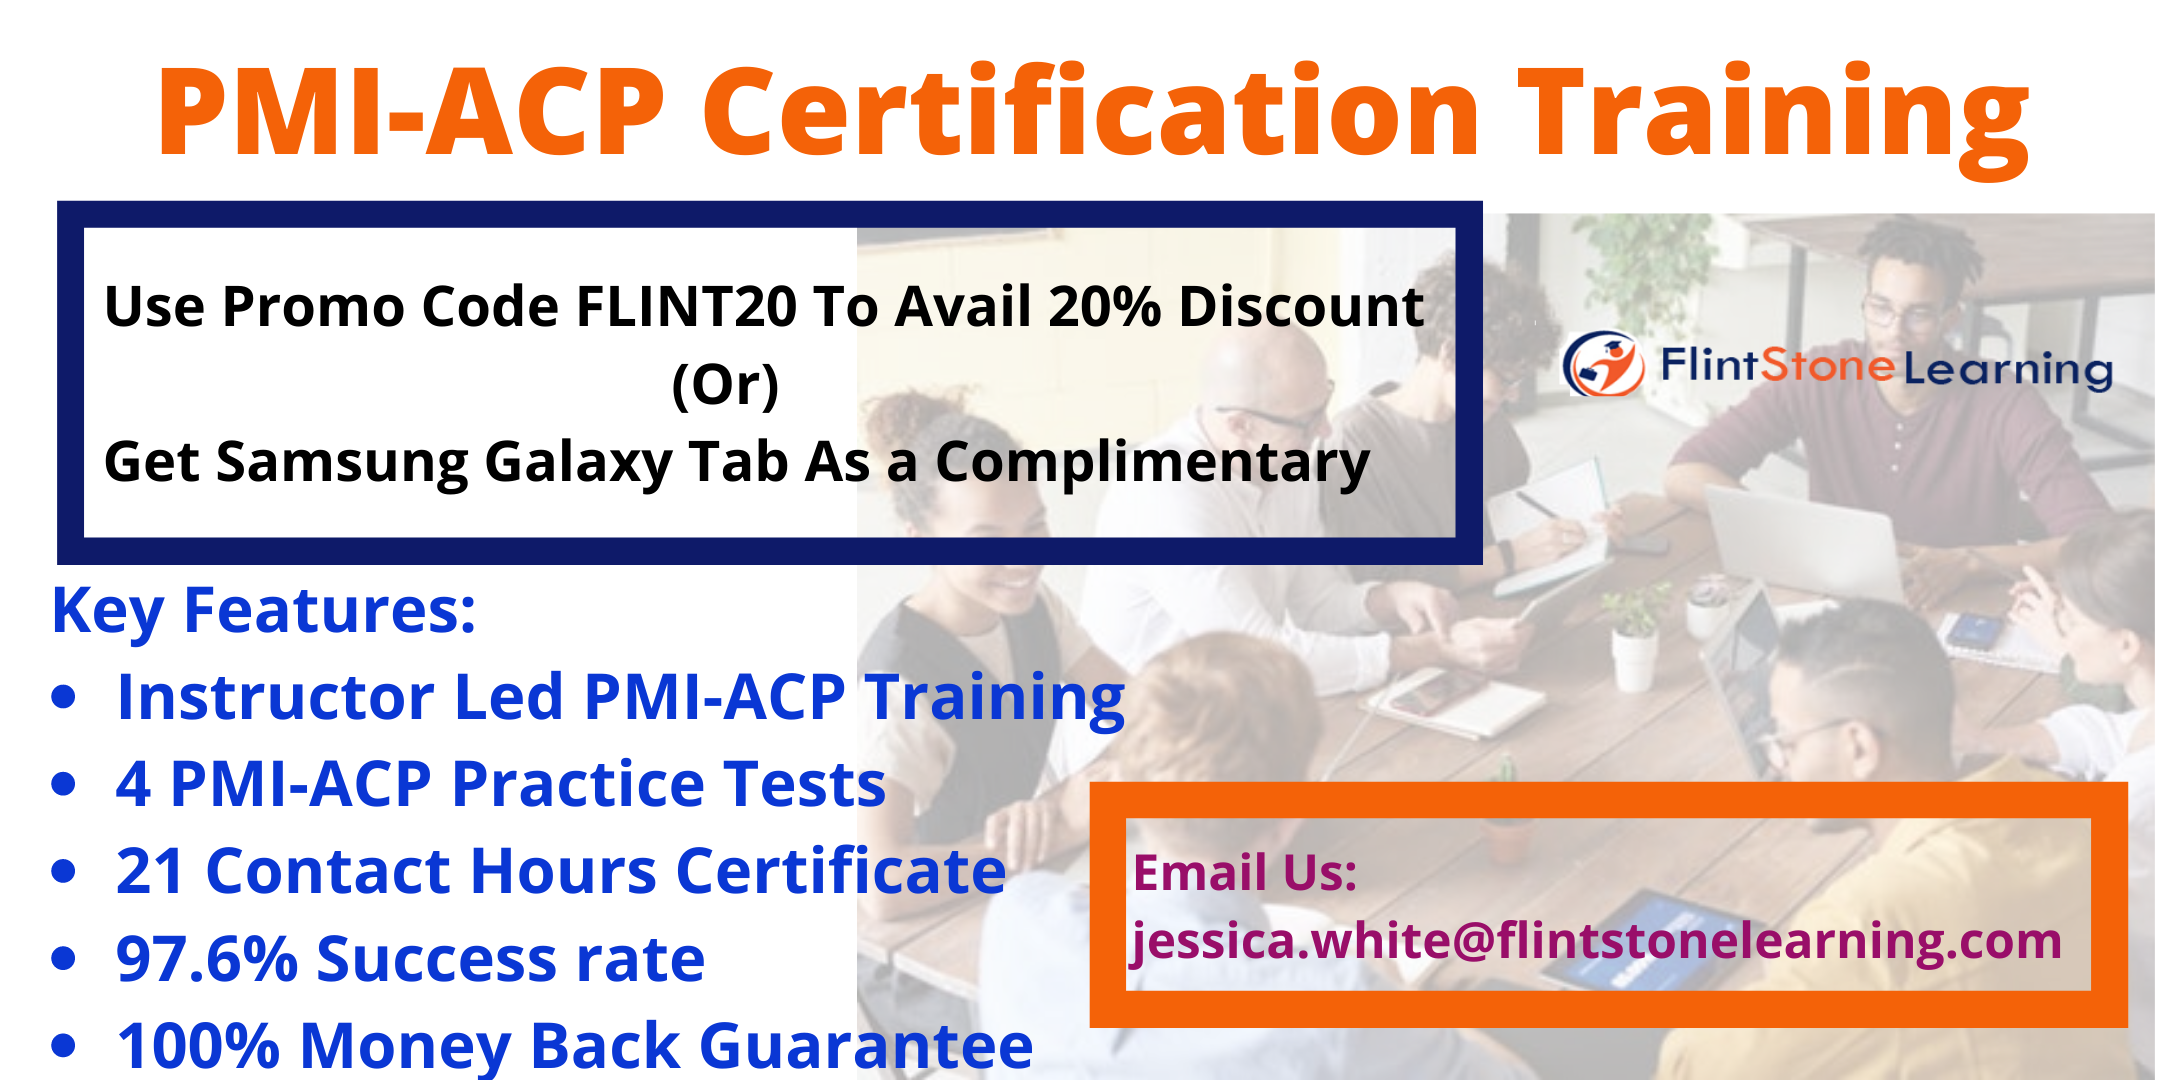 PMI-ACP Certification Course in Denver, CO, Denver, Colorado, United States